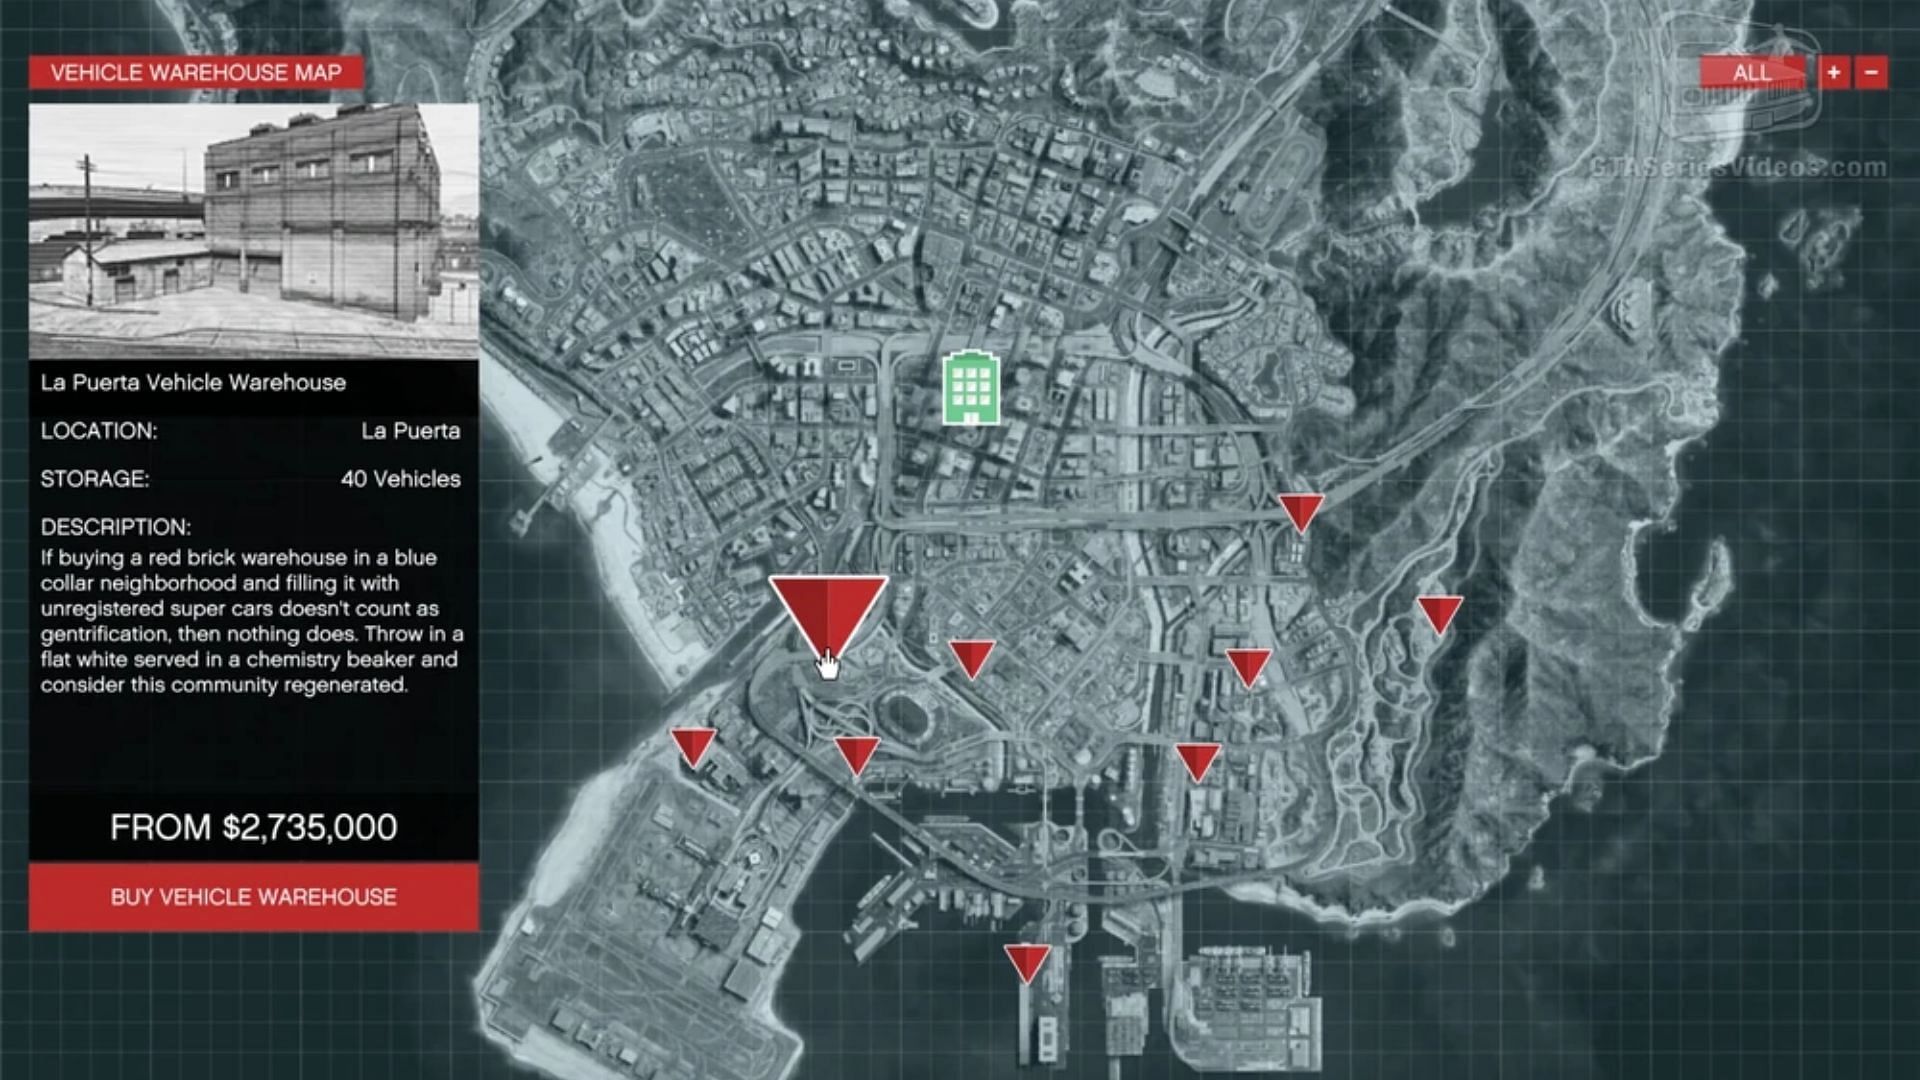 The La Puerta Vehicle Warehouse location in Grand Theft Auto Online (Image via GTA Wiki)